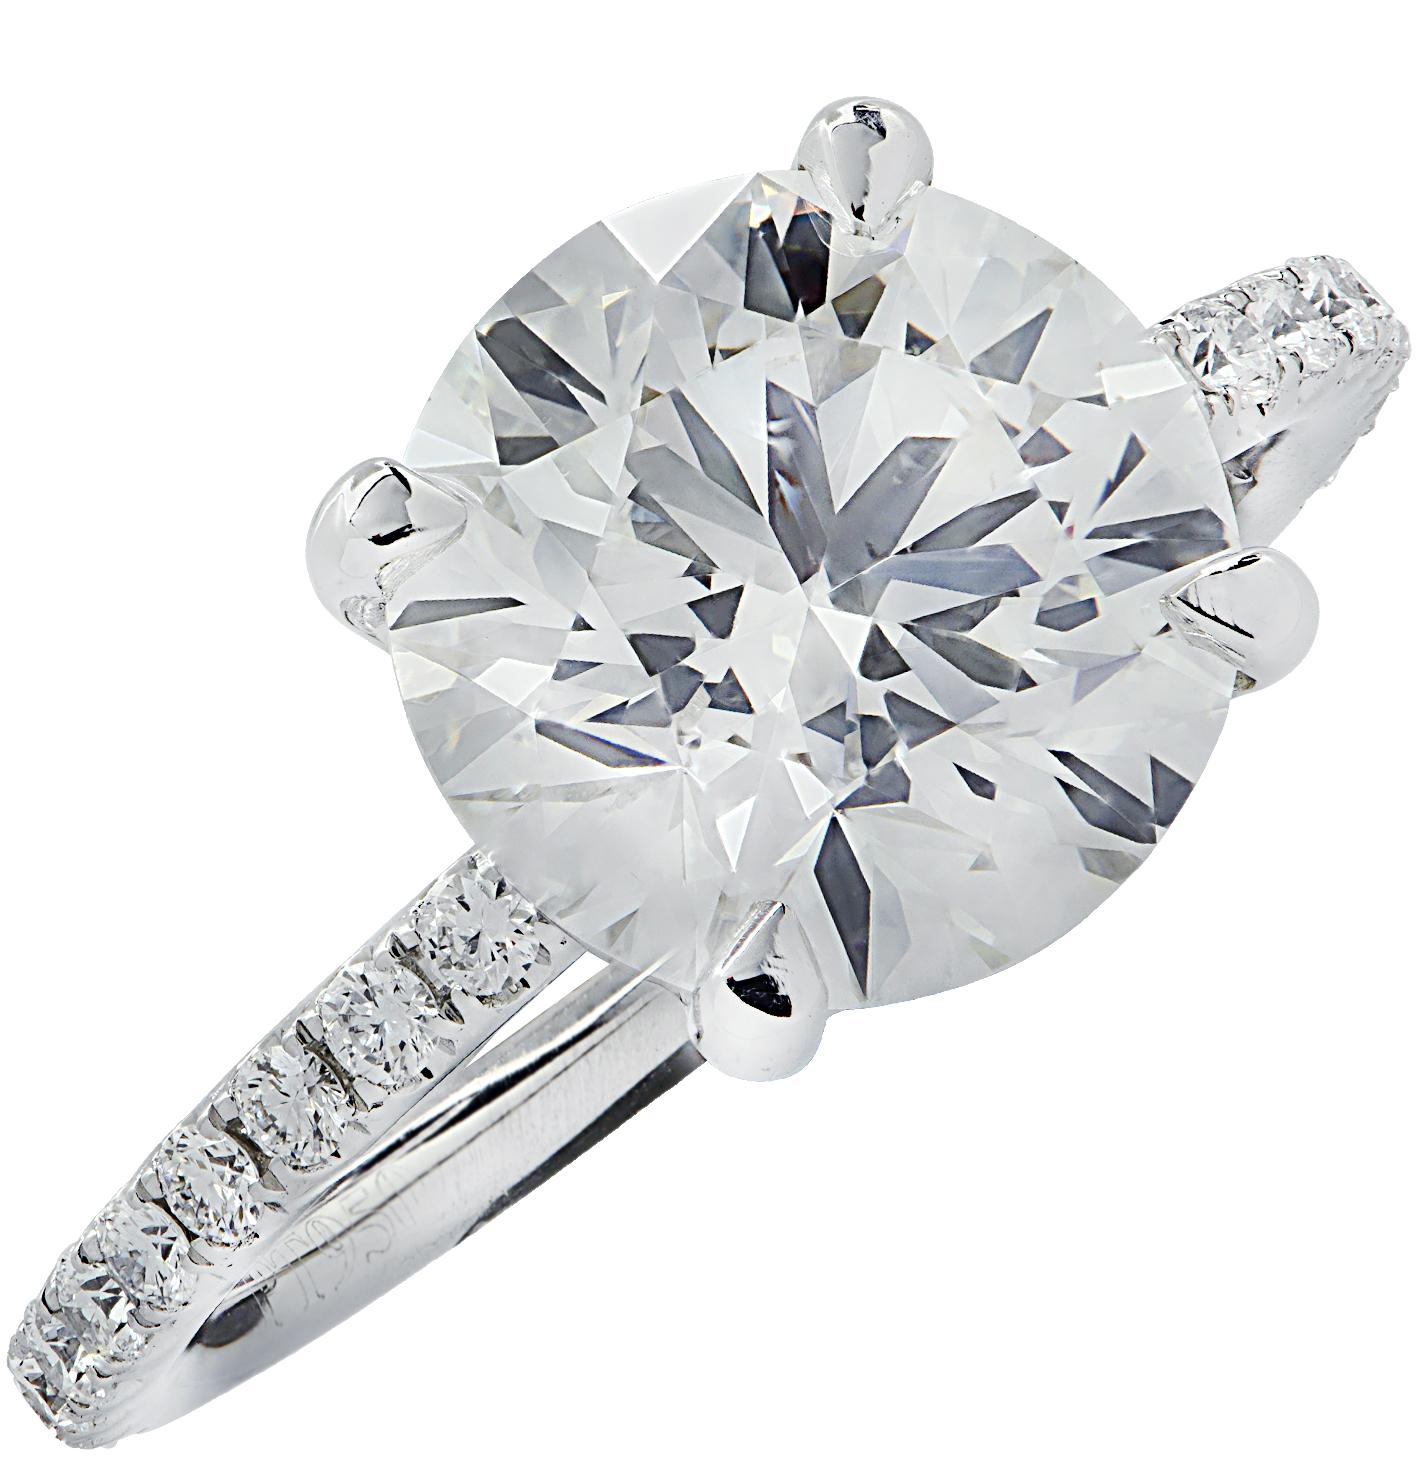 Brilliant Cut Vivid Diamonds GIA Certified 3.56 Carat Diamond Engagement Ring For Sale